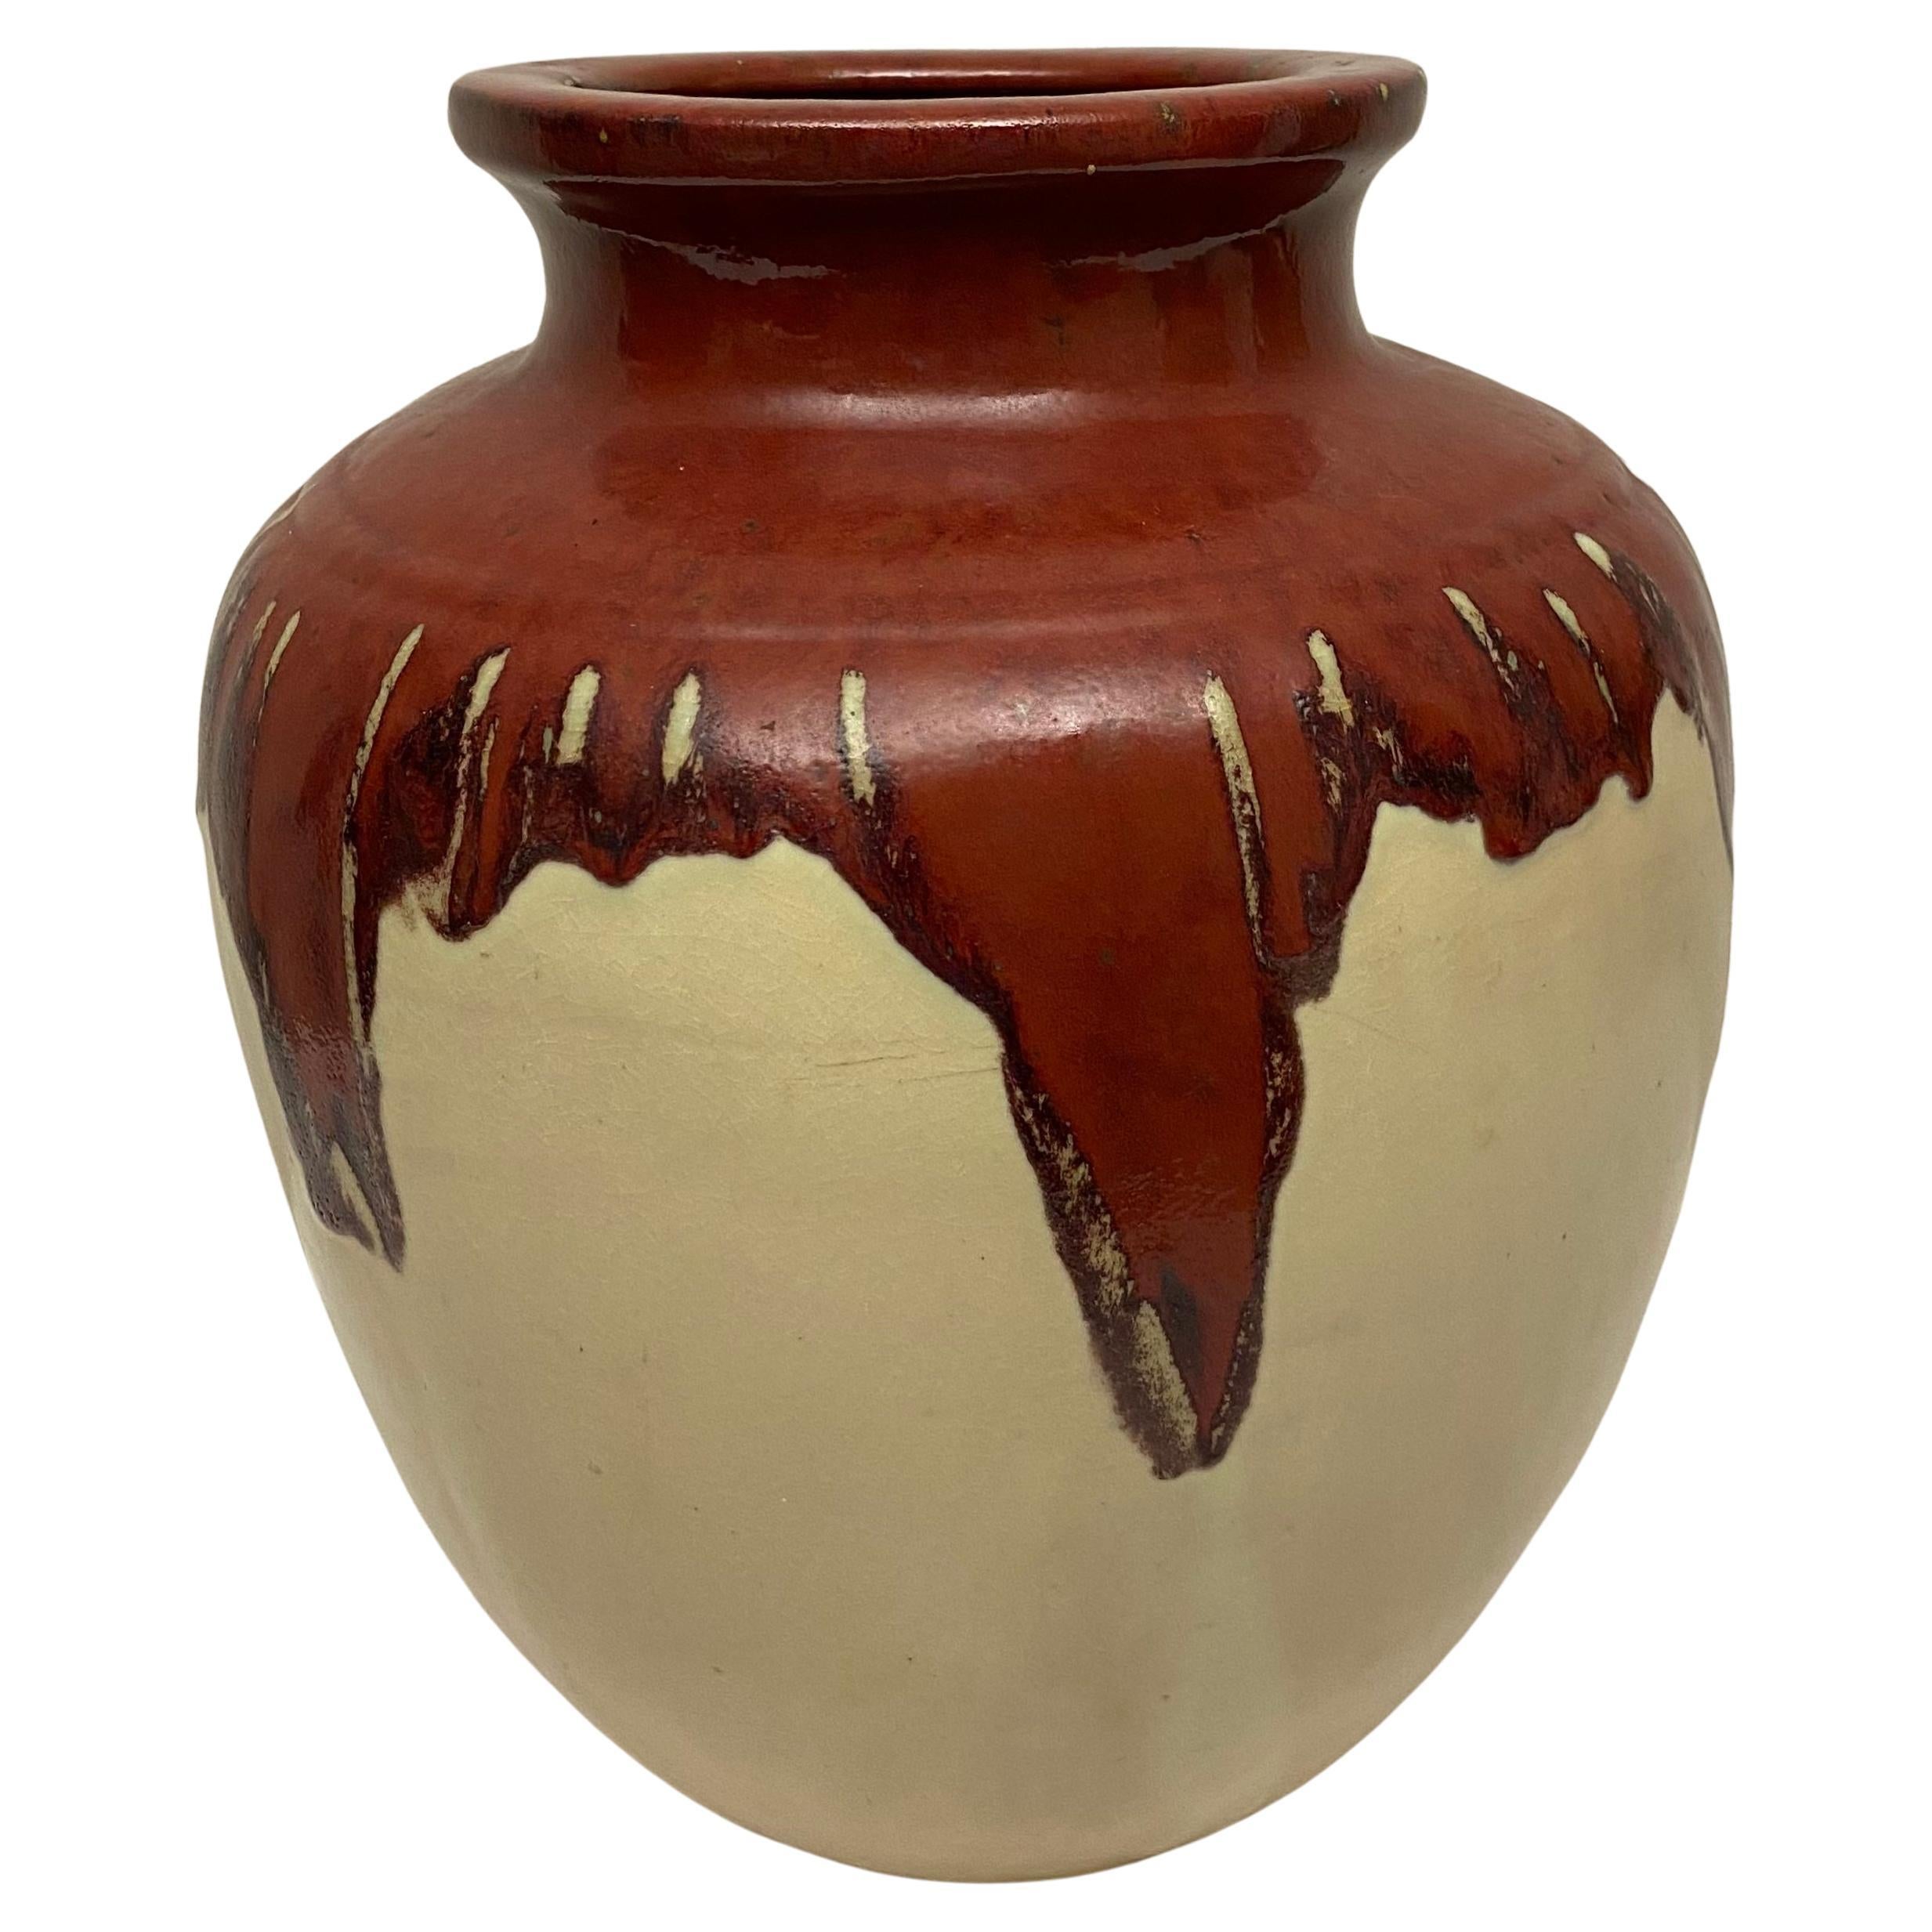 Large Southwest Style Ceramic Pottery Floor Vase or Centerpiece